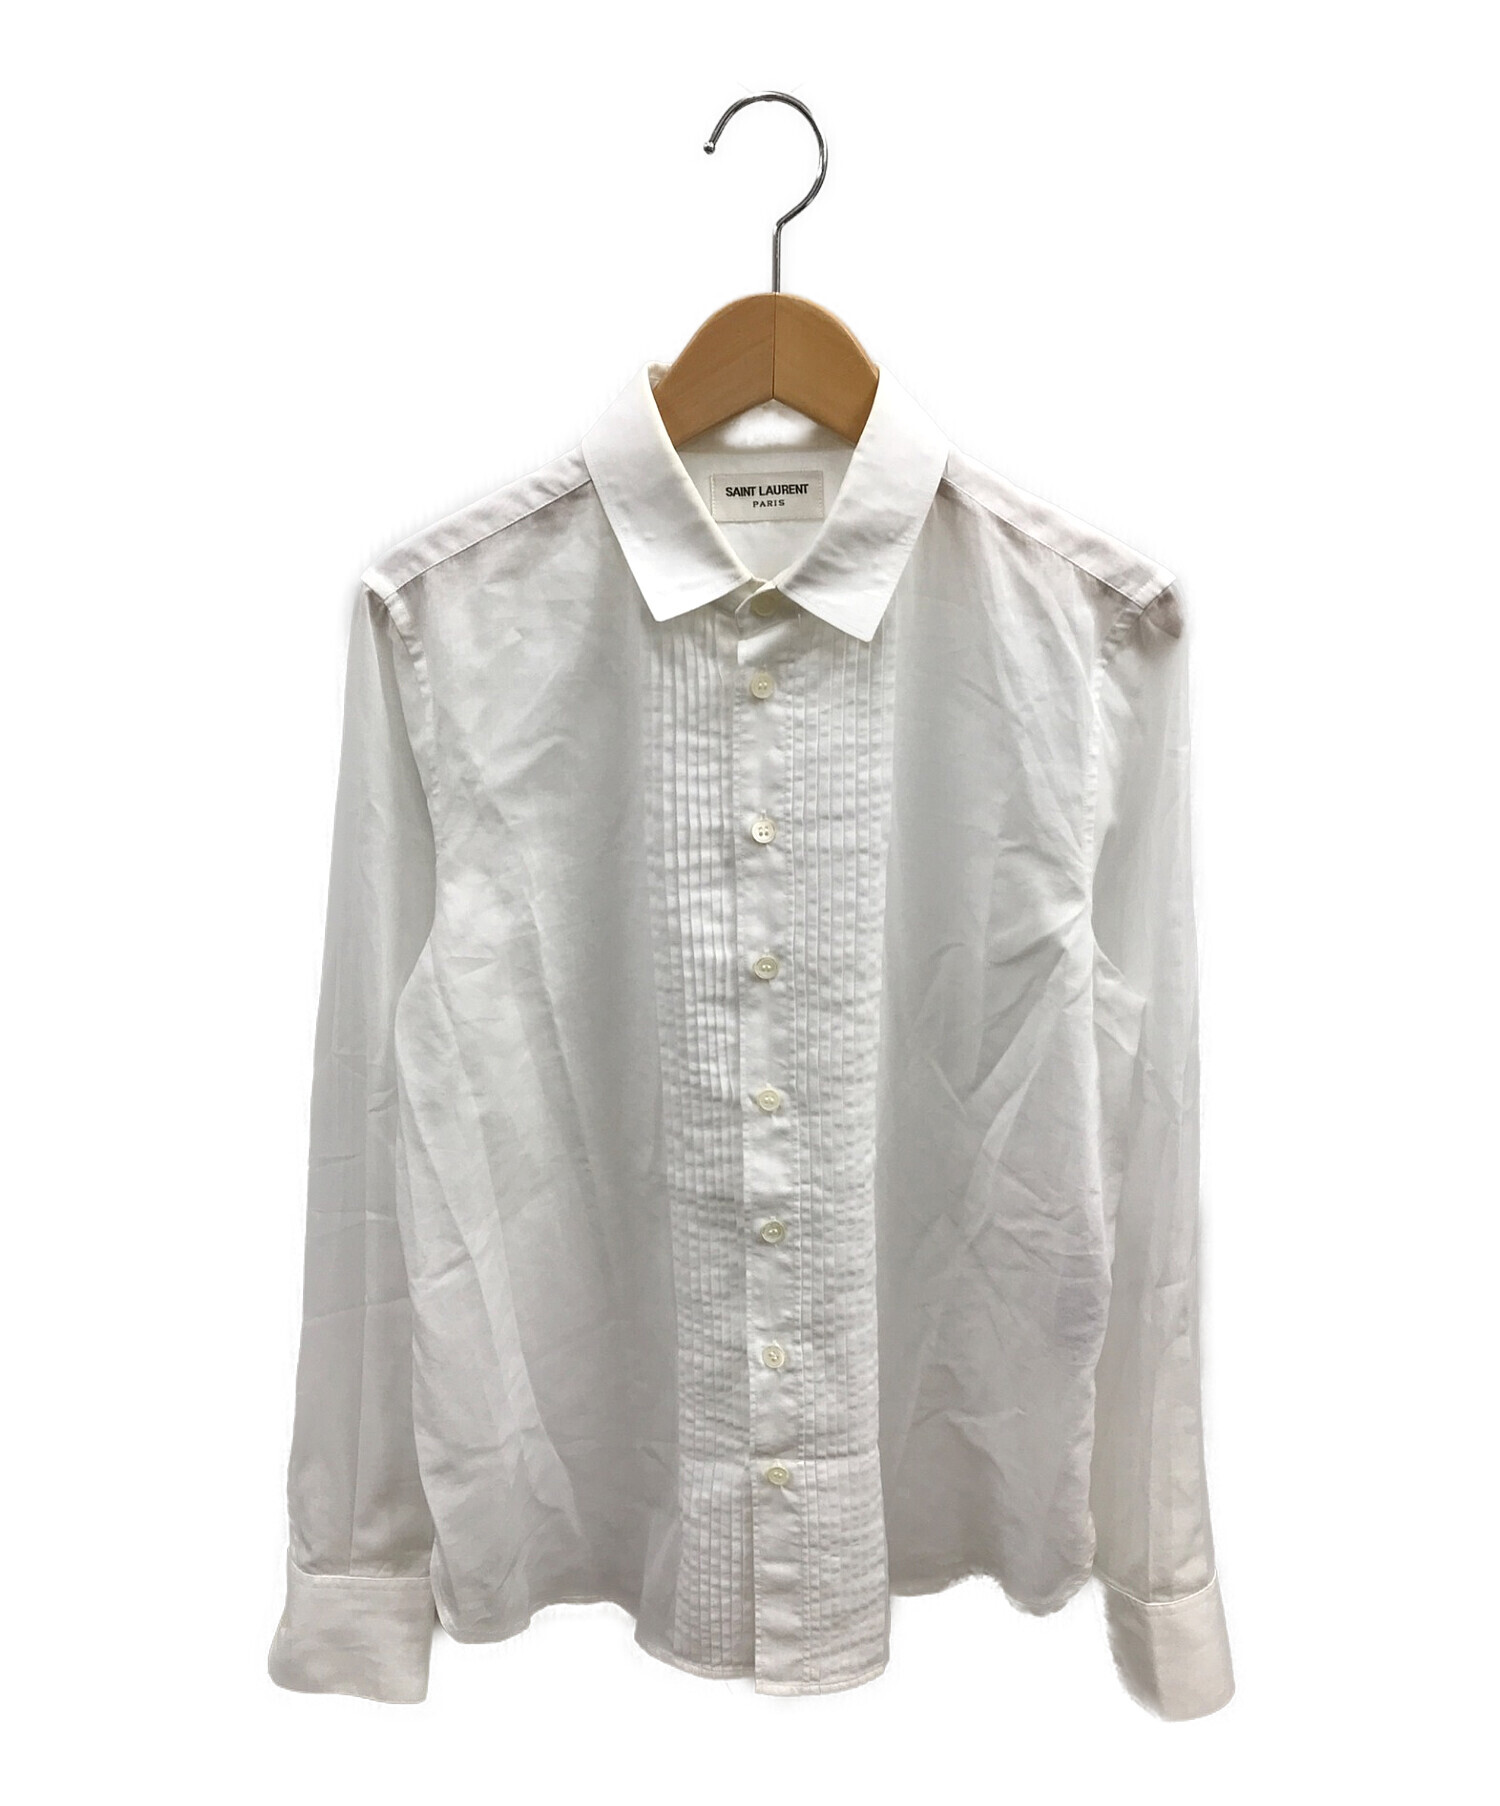 Saint Laurent Paris (サンローランパリ) ドレスシャツ ホワイト サイズ:表記なし